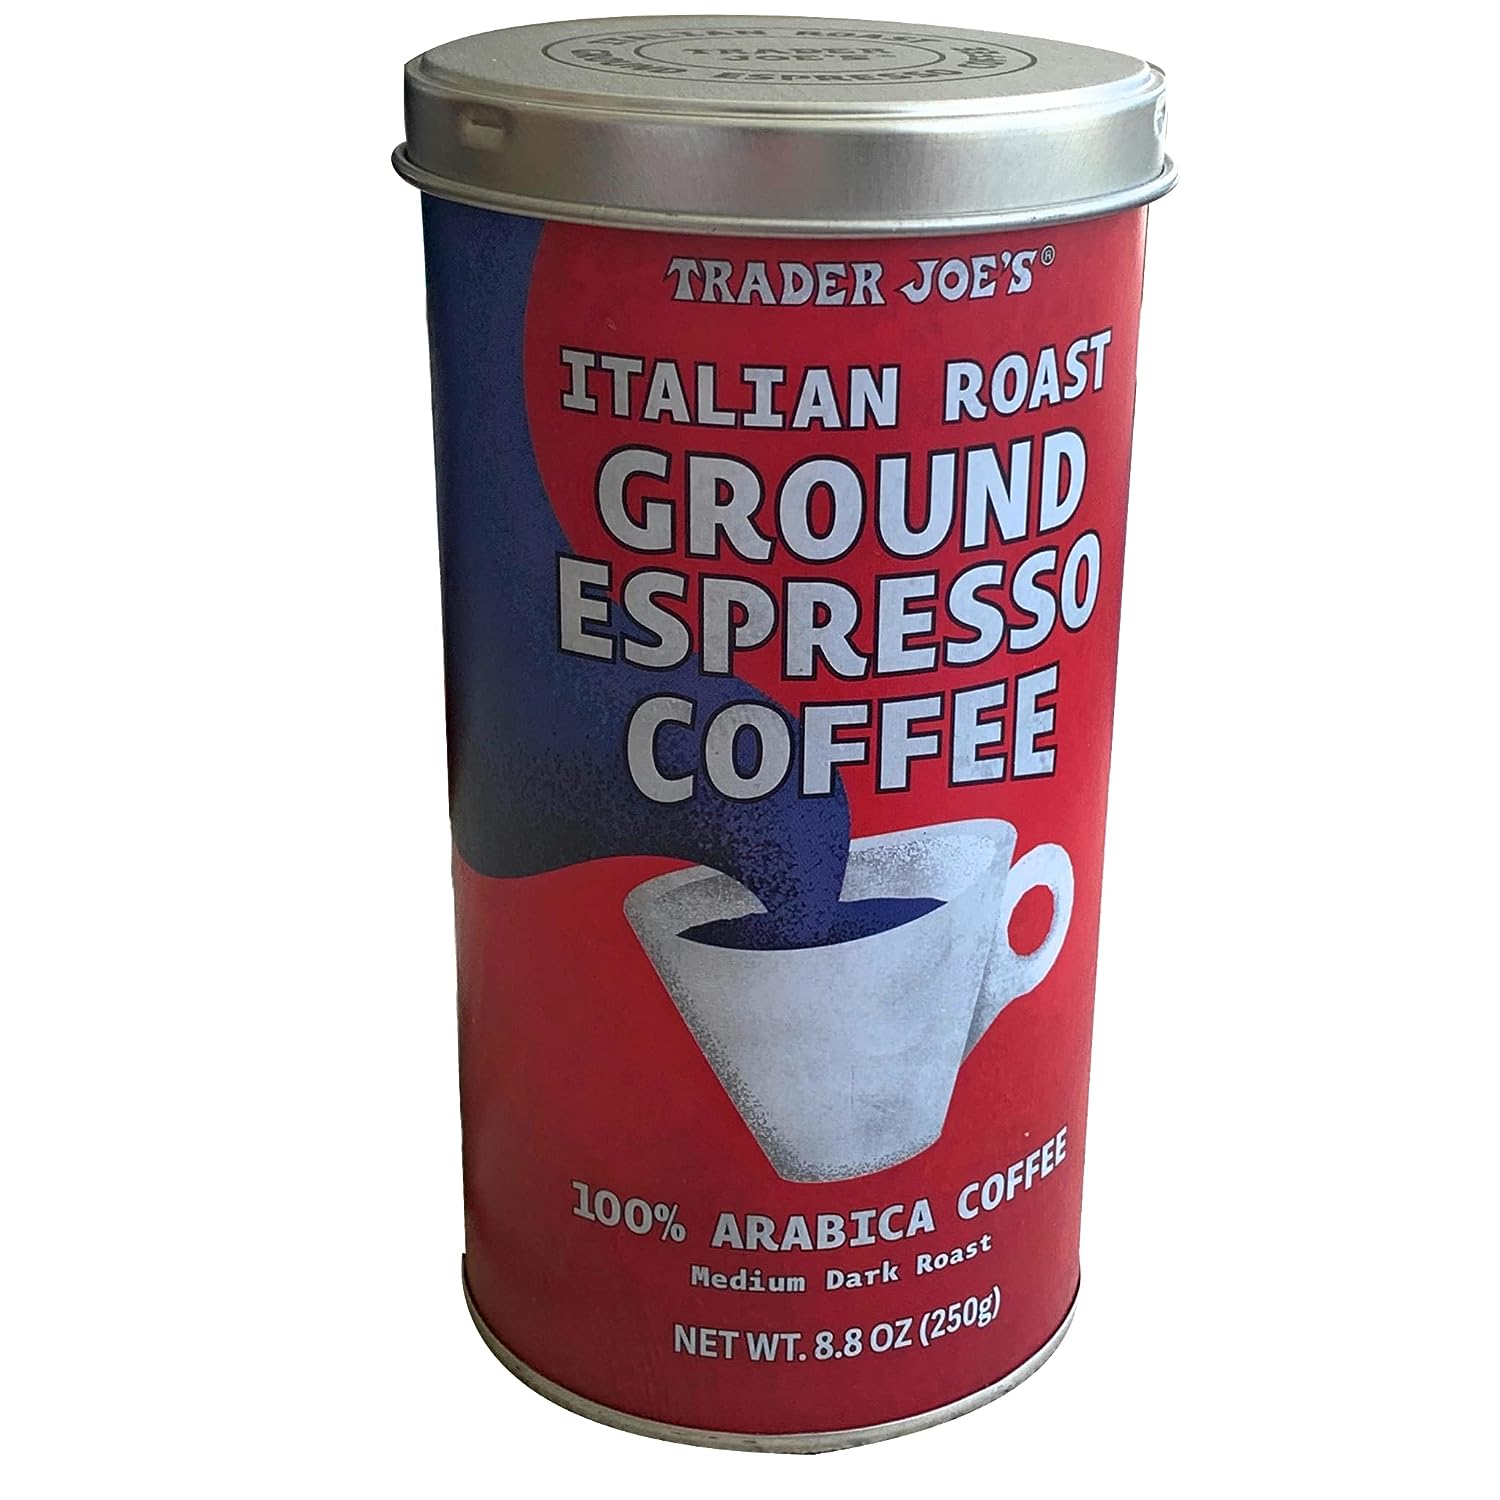 Trader Joe’s Italian Roast Ground Espresso Coffee, 100% Arabica Coffee